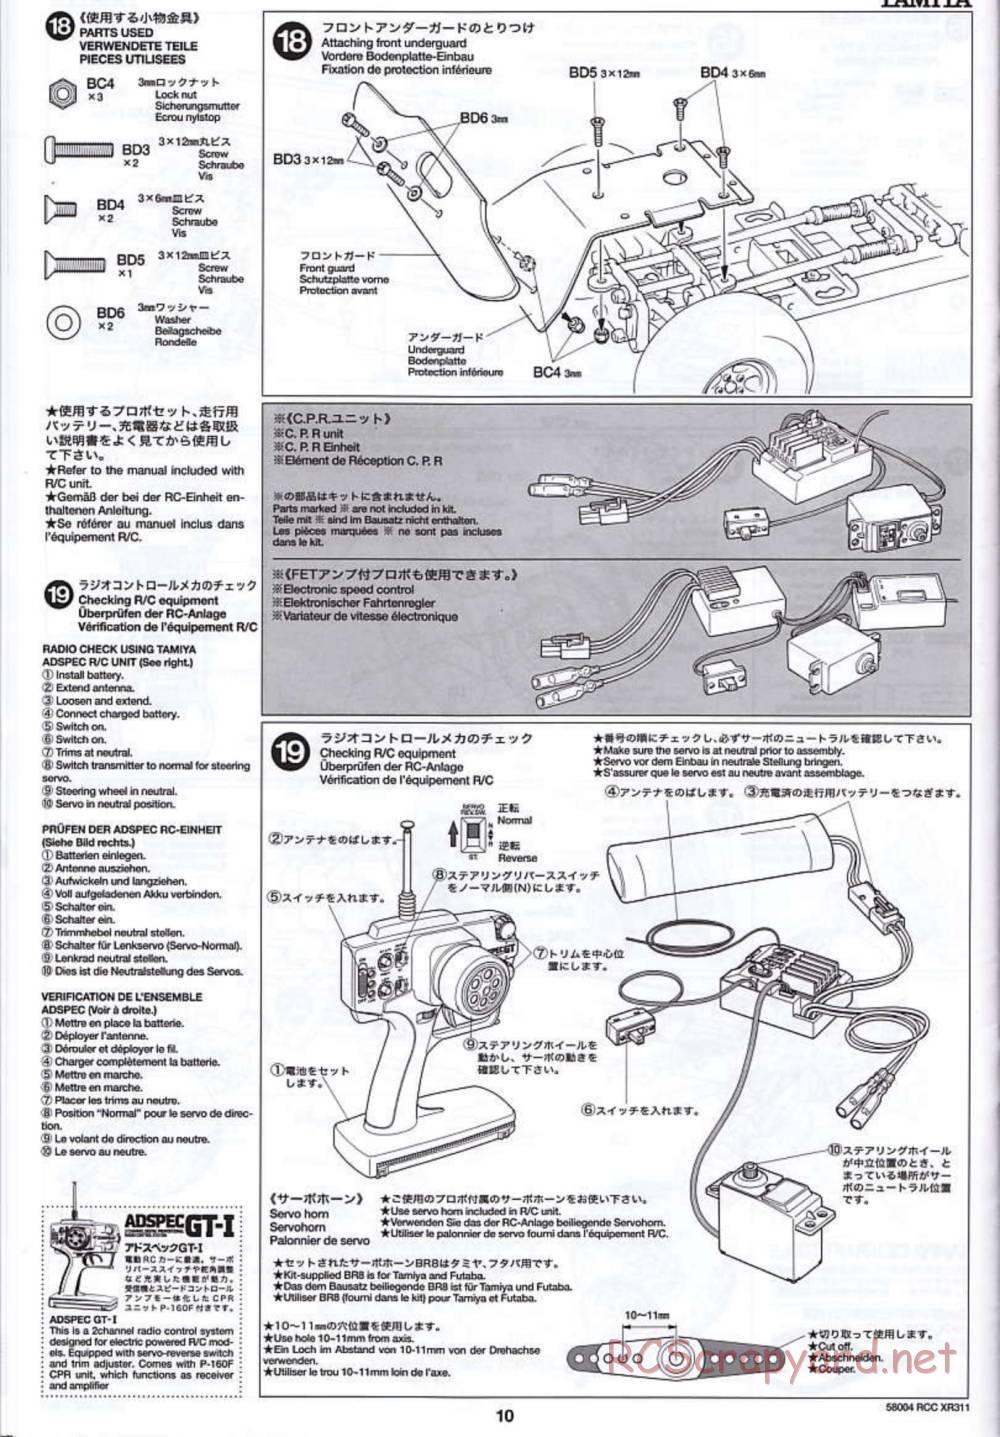 Tamiya - XR311 Combat Support Vehicle (2000) - 58004 - Manual - Page 11